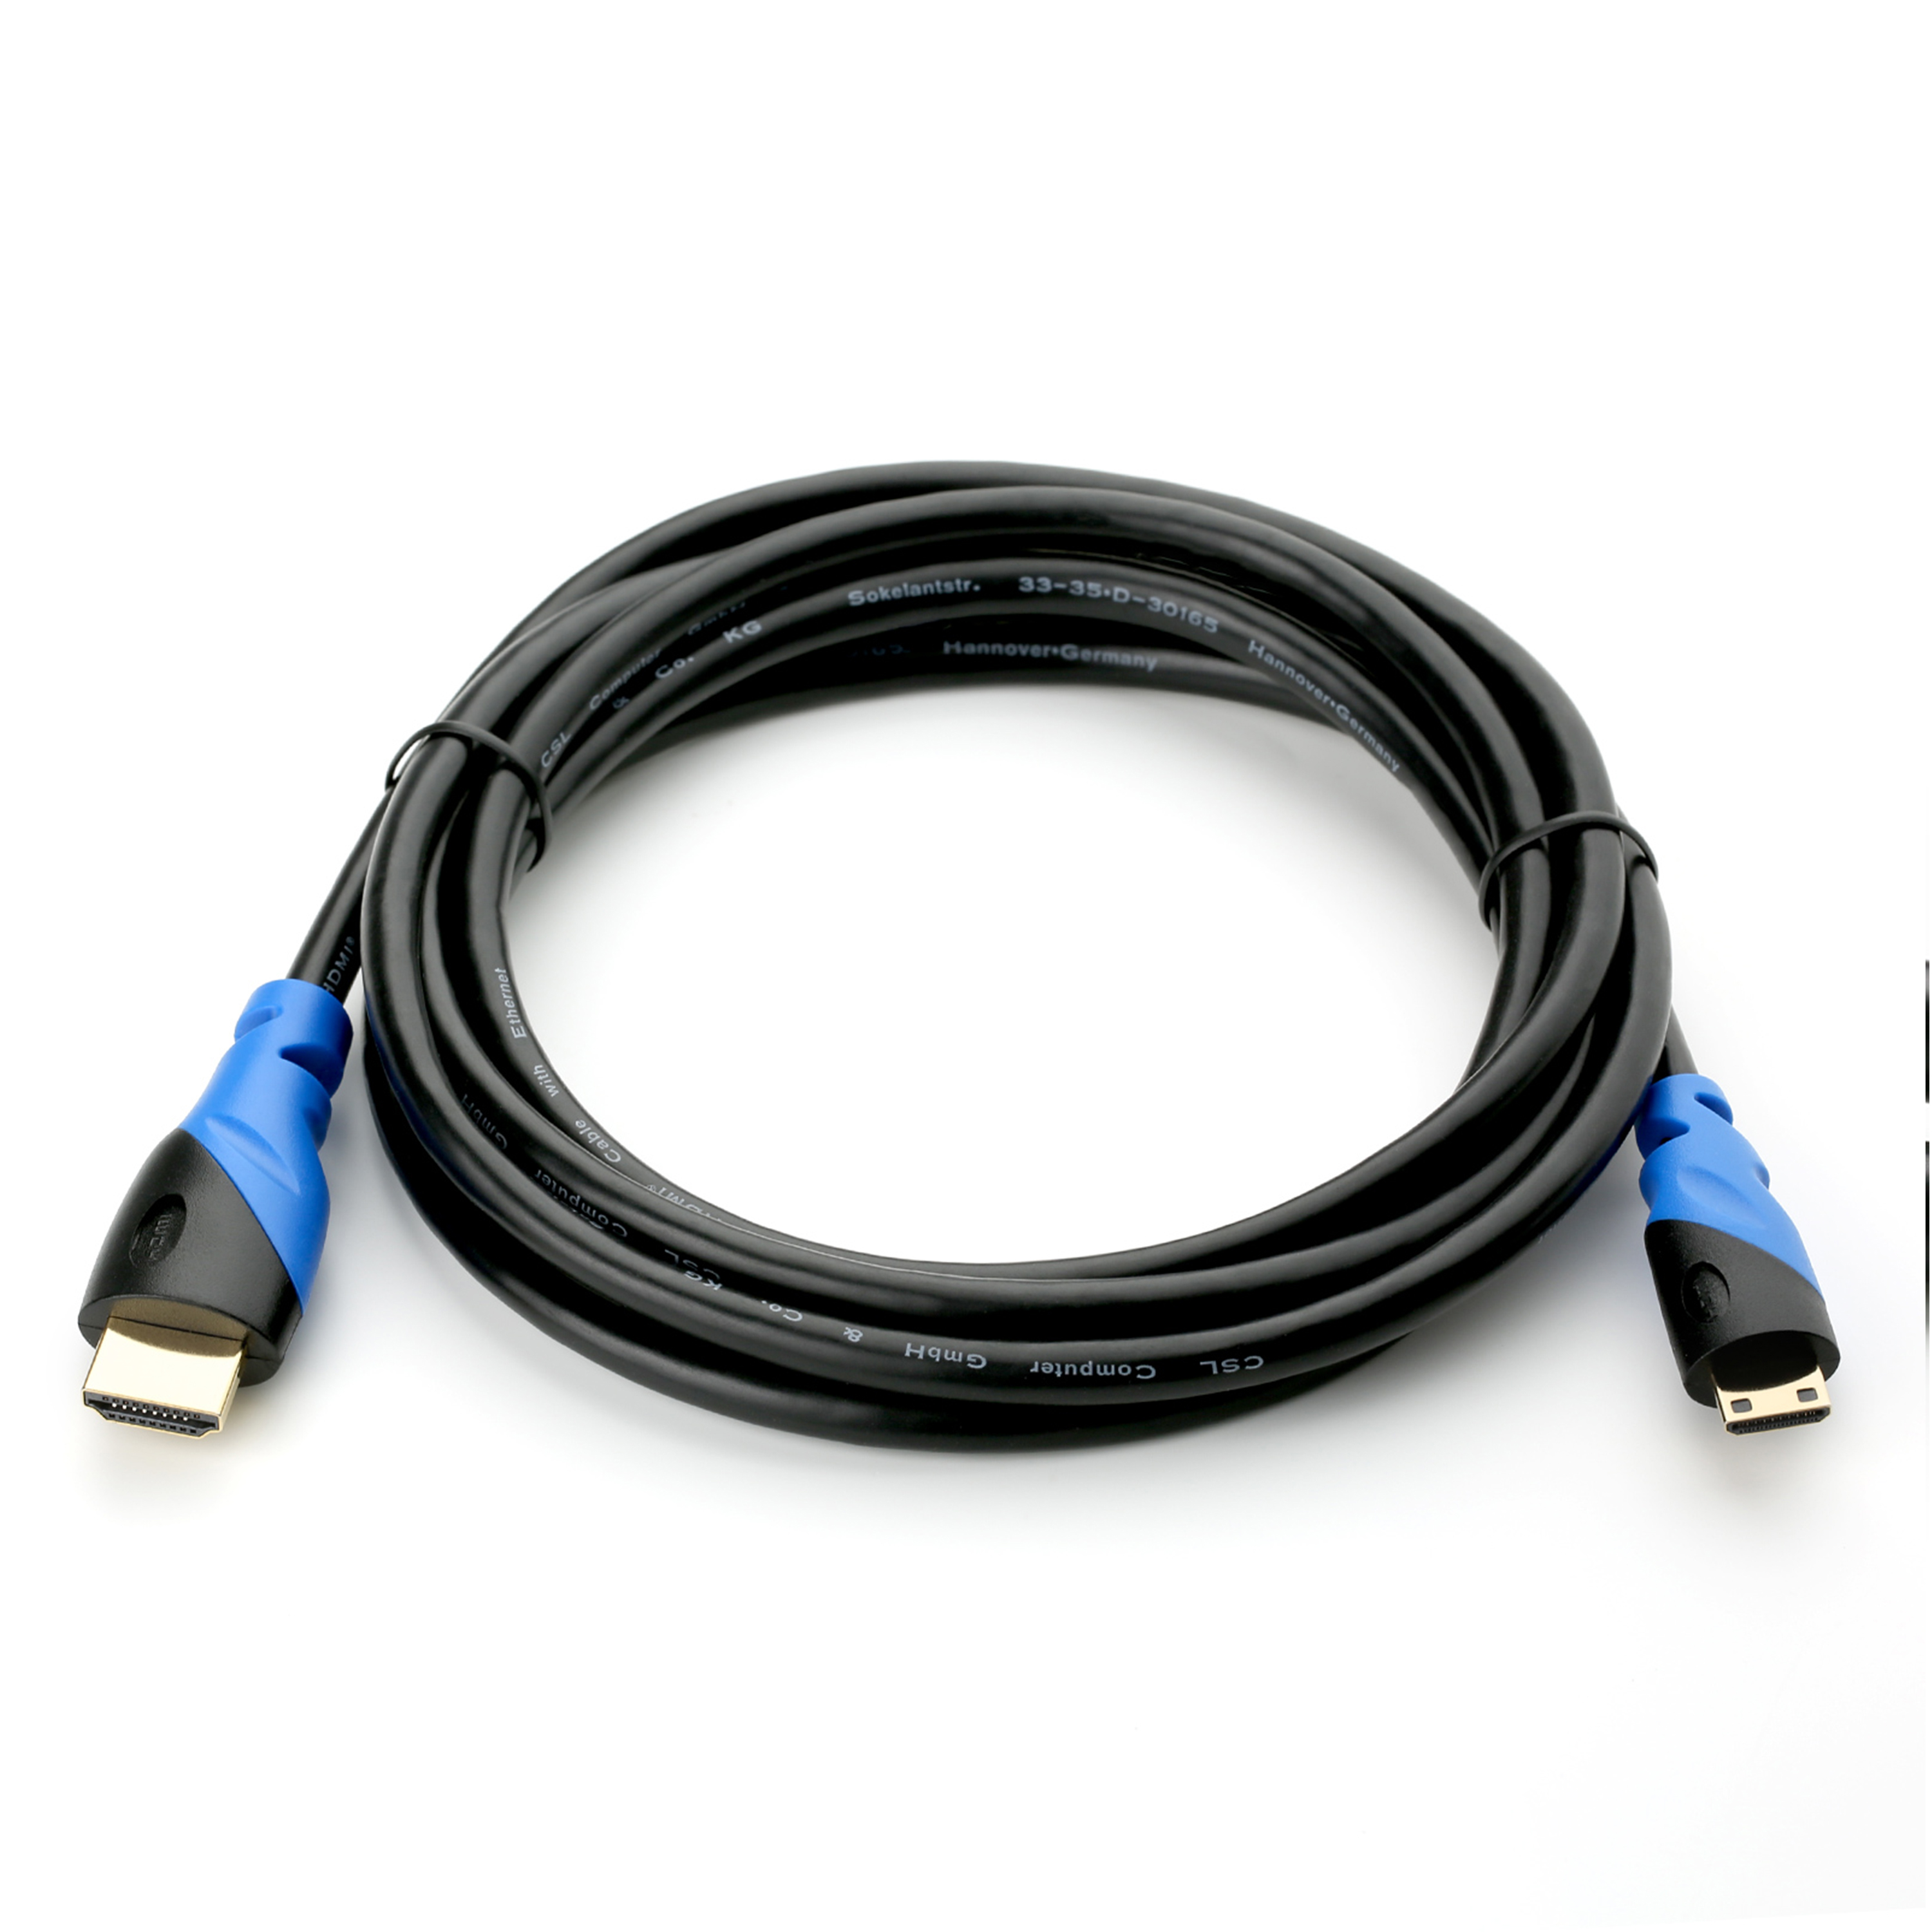 CSL MiniHDMI 2.0 Kabel, 2m Kabel, schwarz/blau HDMI